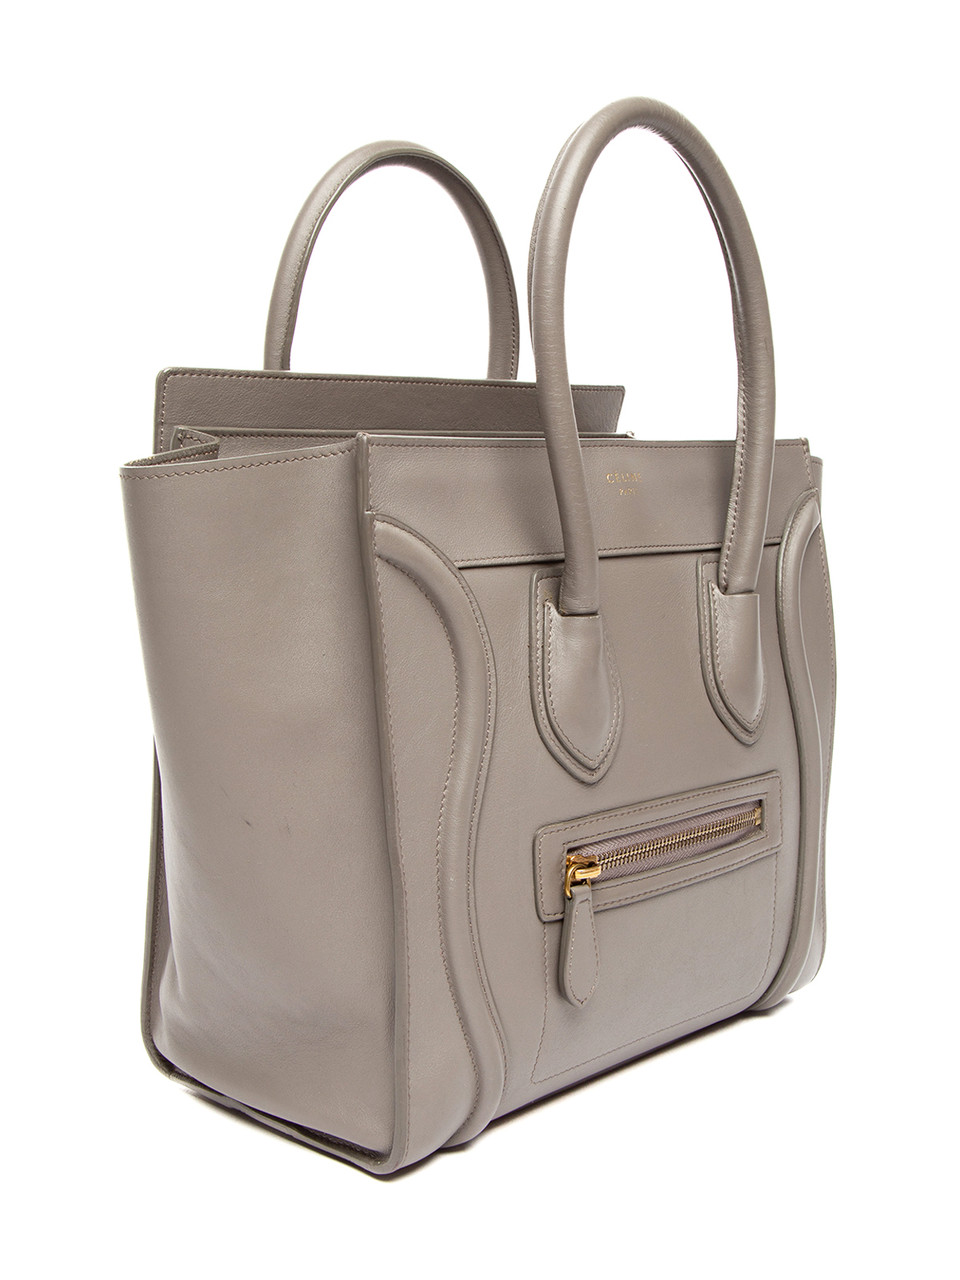 Céline,Nano Luggage Bag,Grey,Leather,Plain